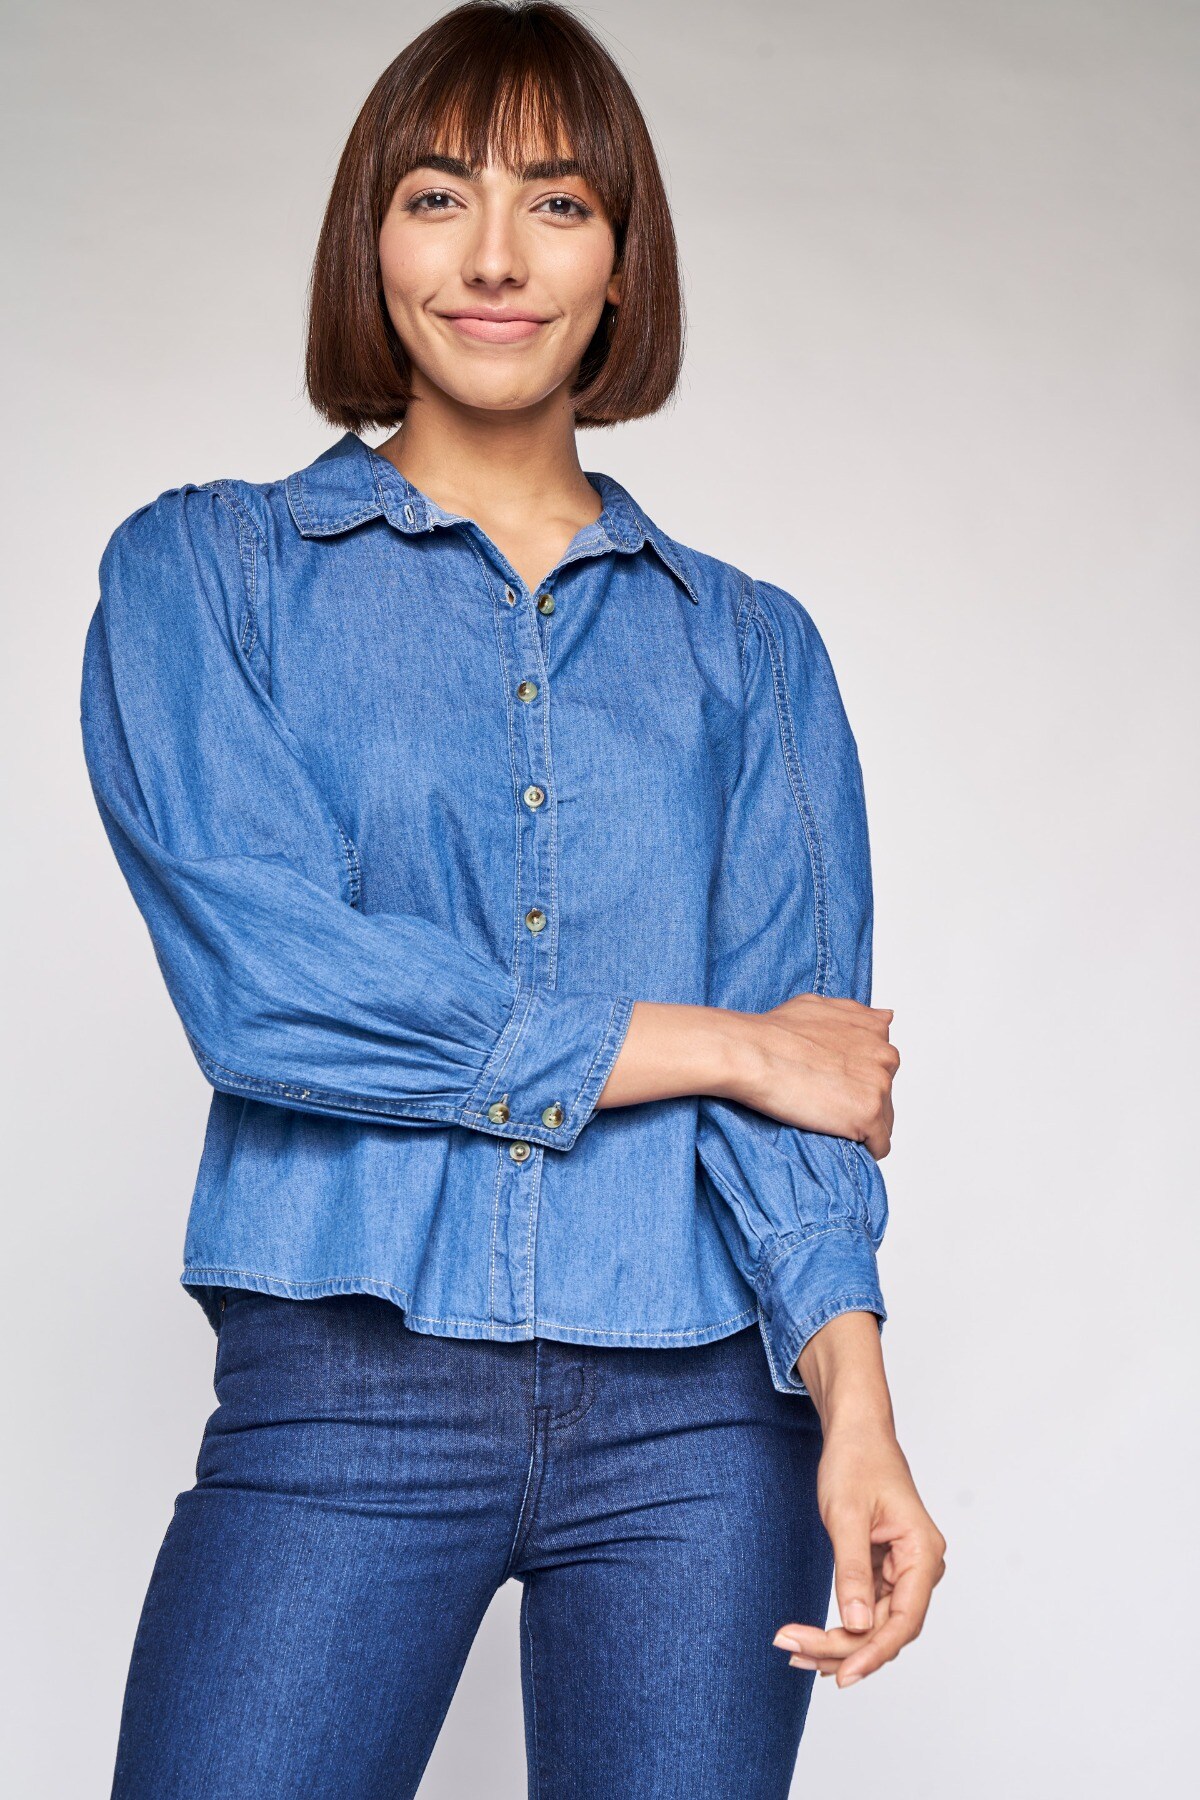 2 - Medium Blue Self Design Shirt Style Top, image 2